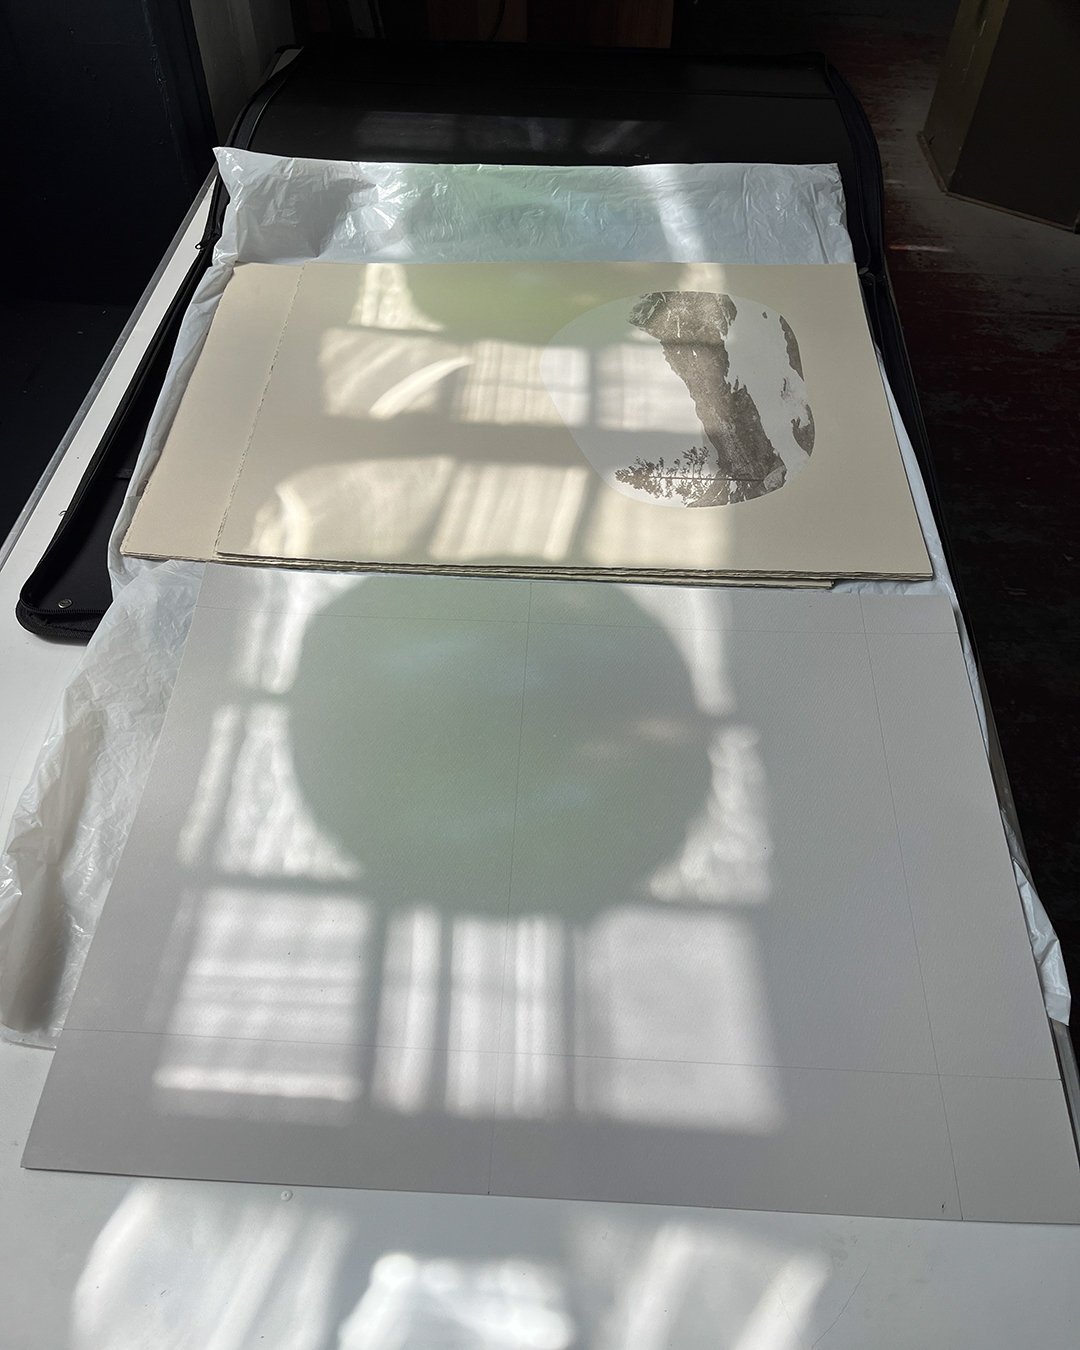 Sherrie-Leigh-Jones-Artist-Printmaker-Printmaking-Process.jpg